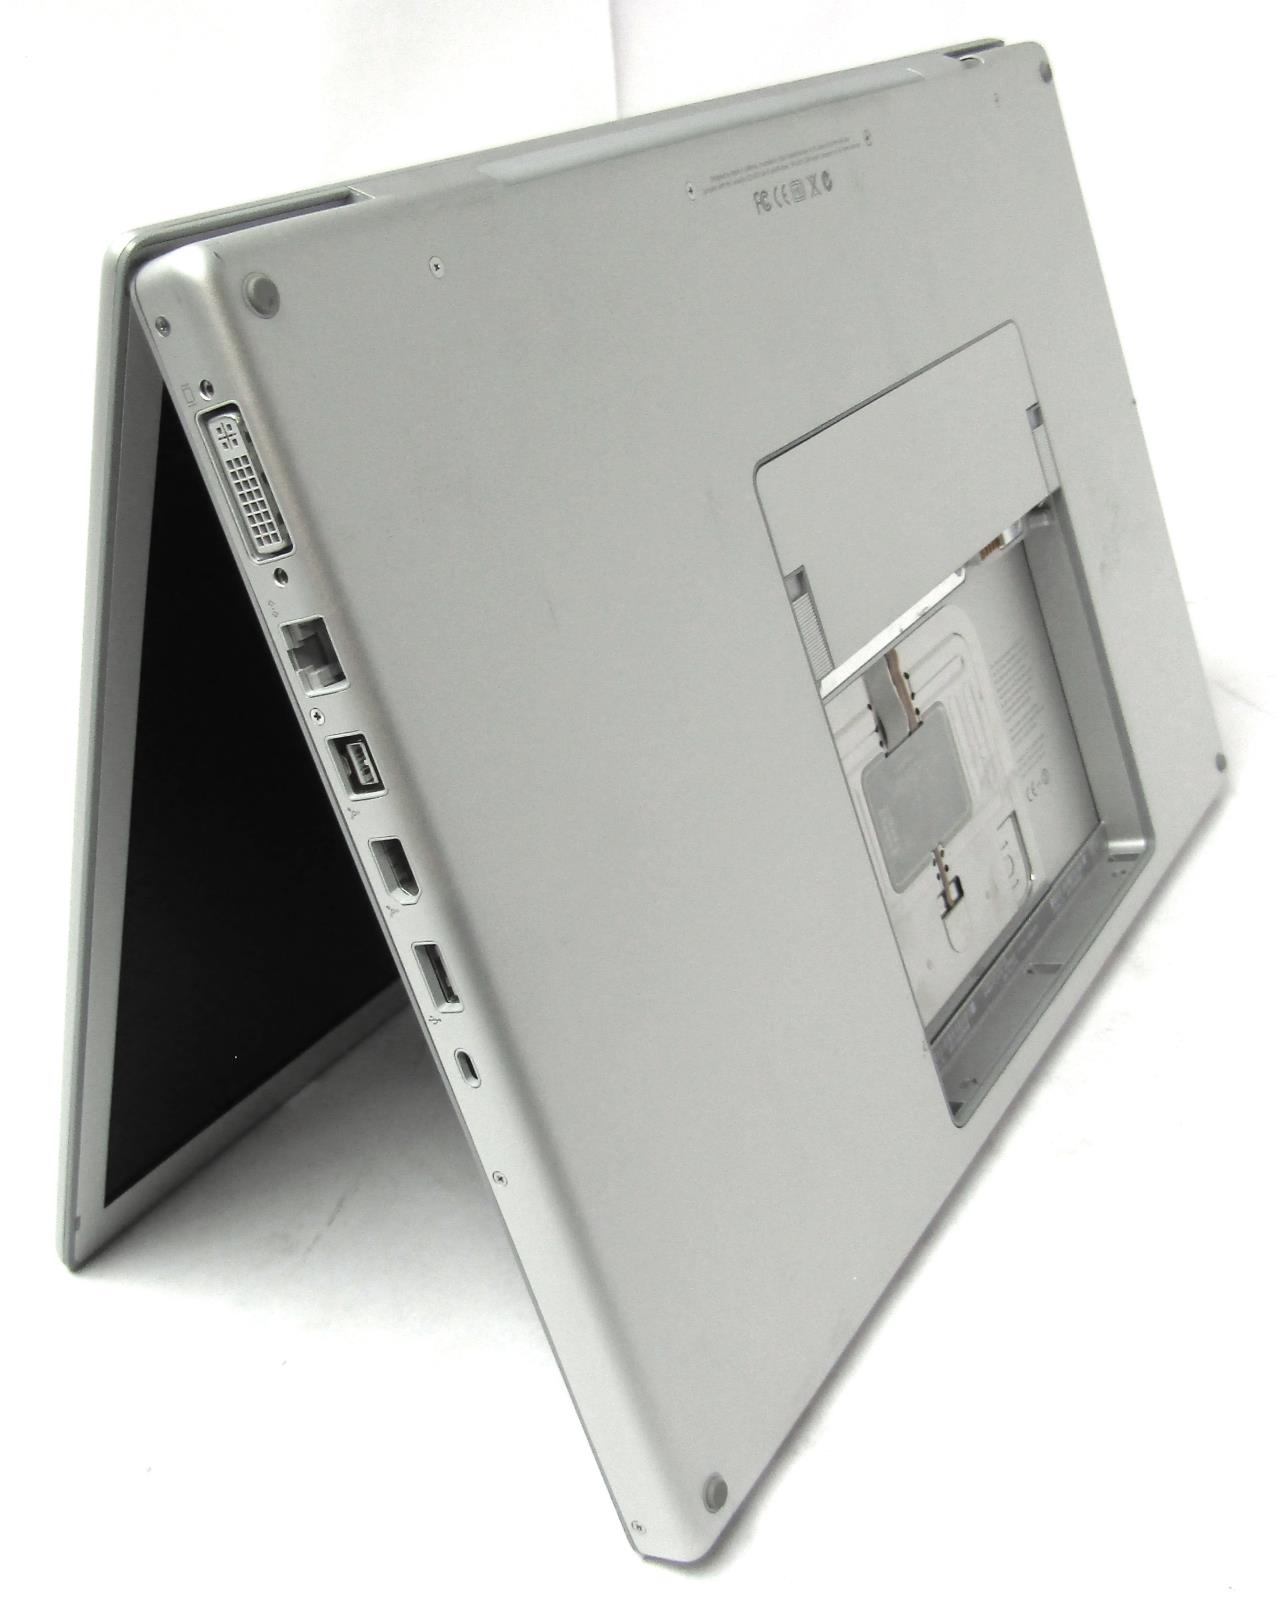 2006 macbook pro memory